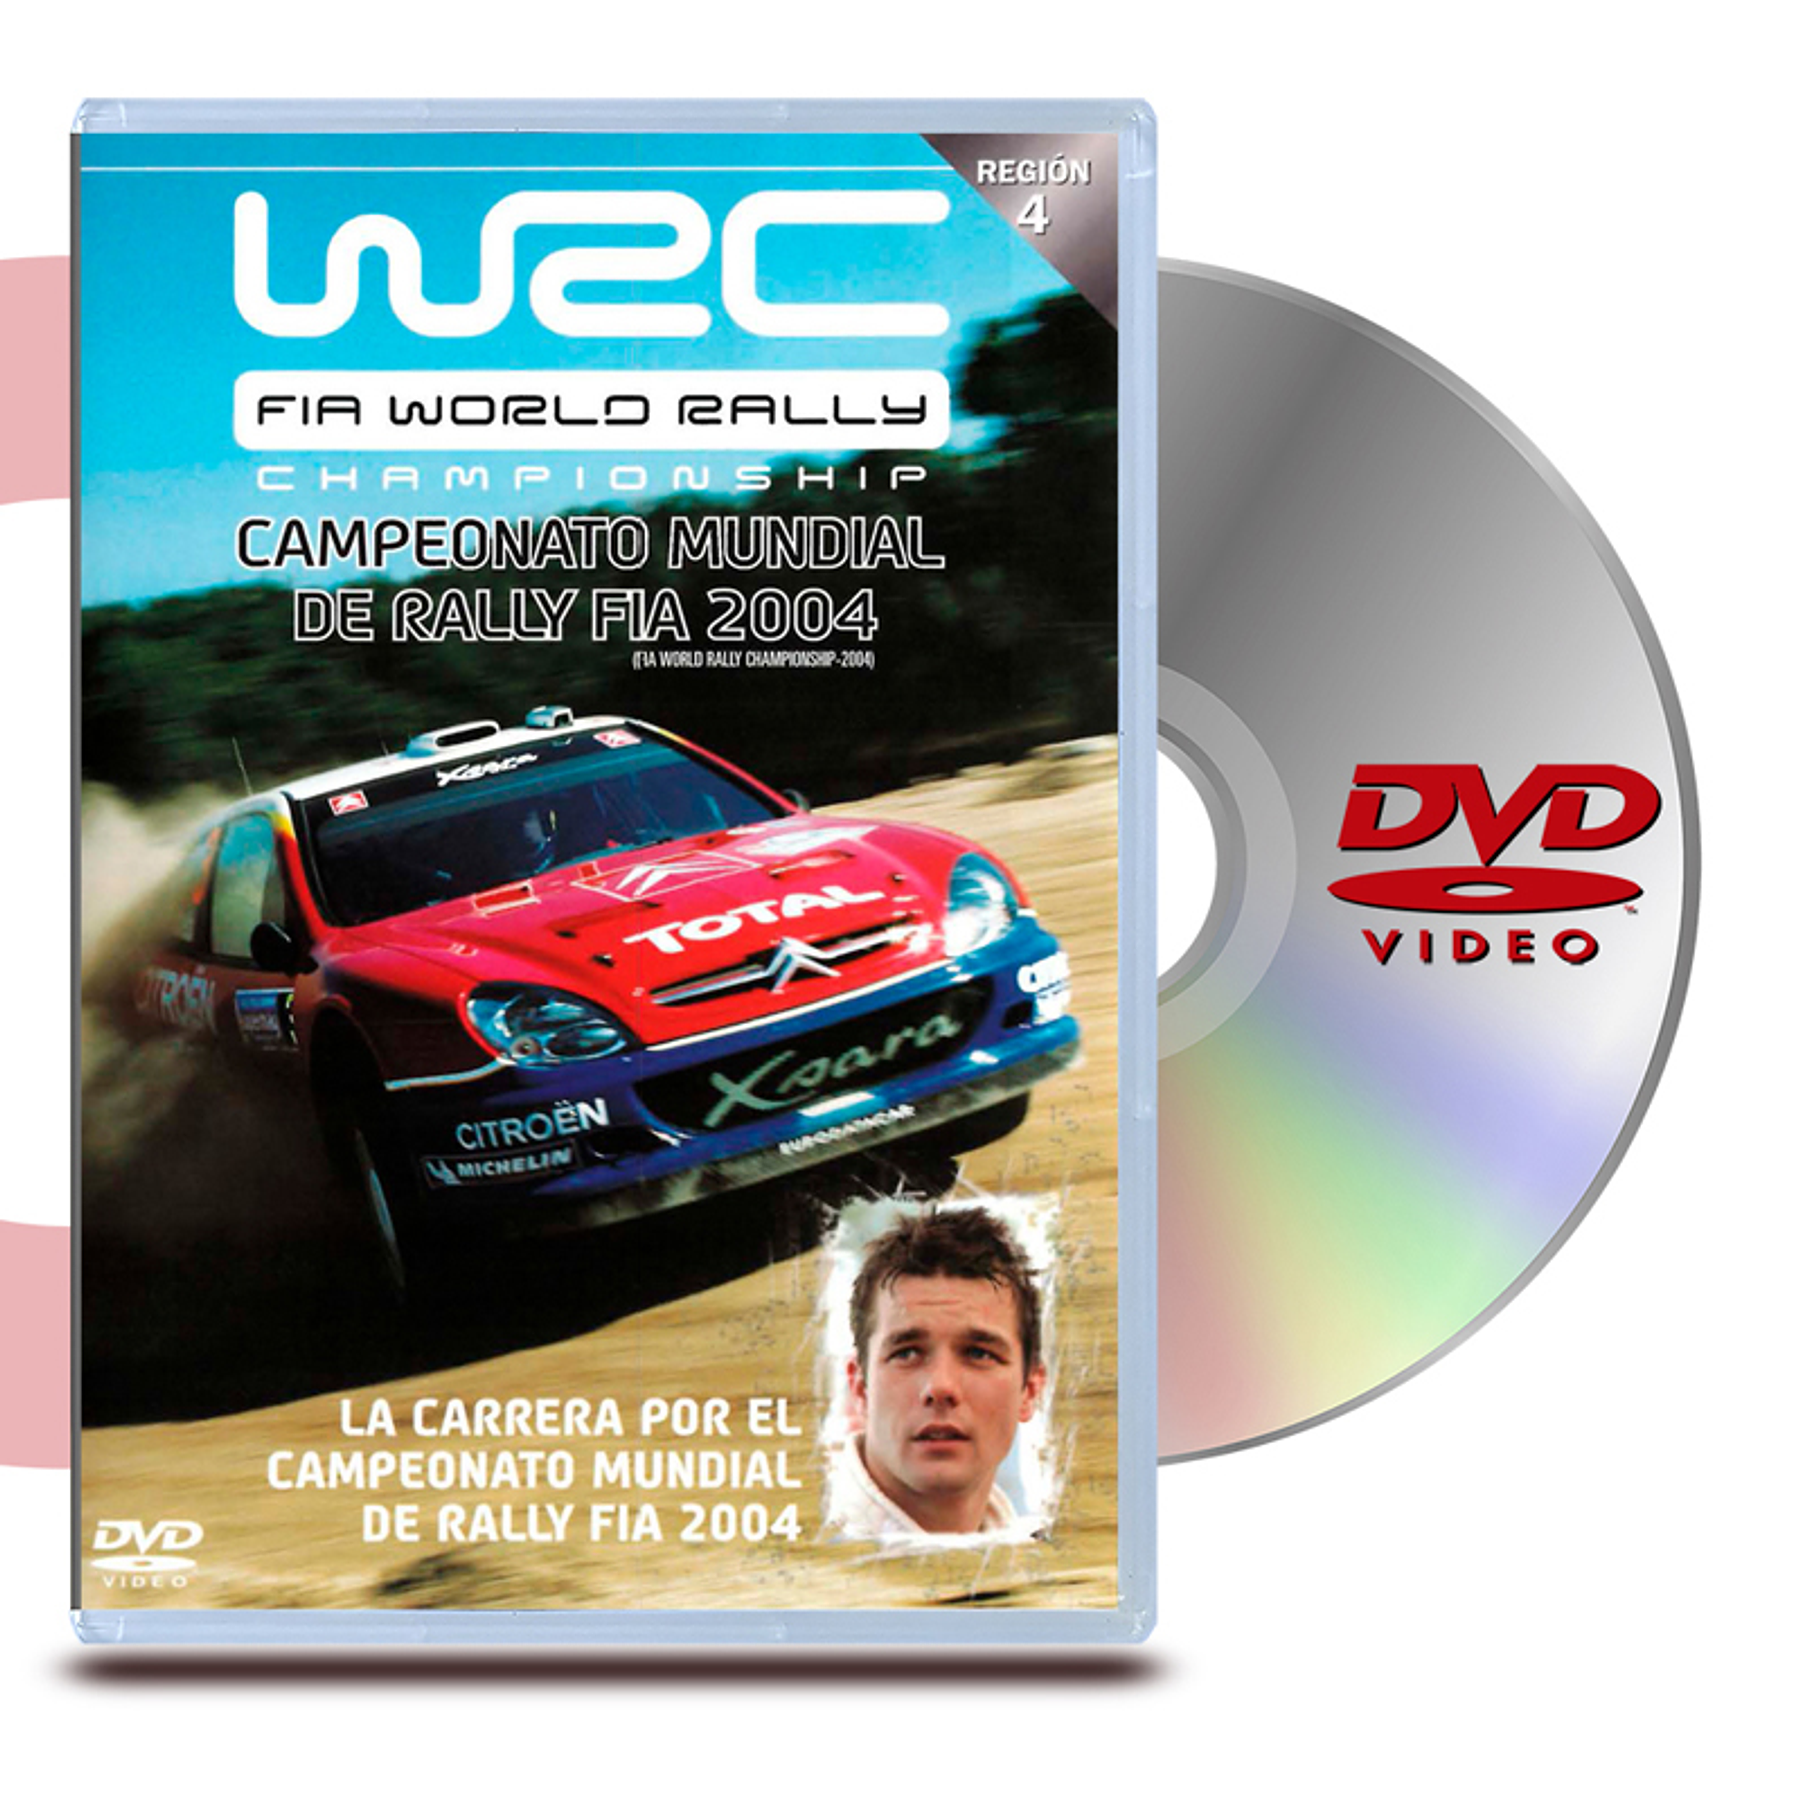 DVD CAMPEONATO MUNDIAL DE RALLY FIA